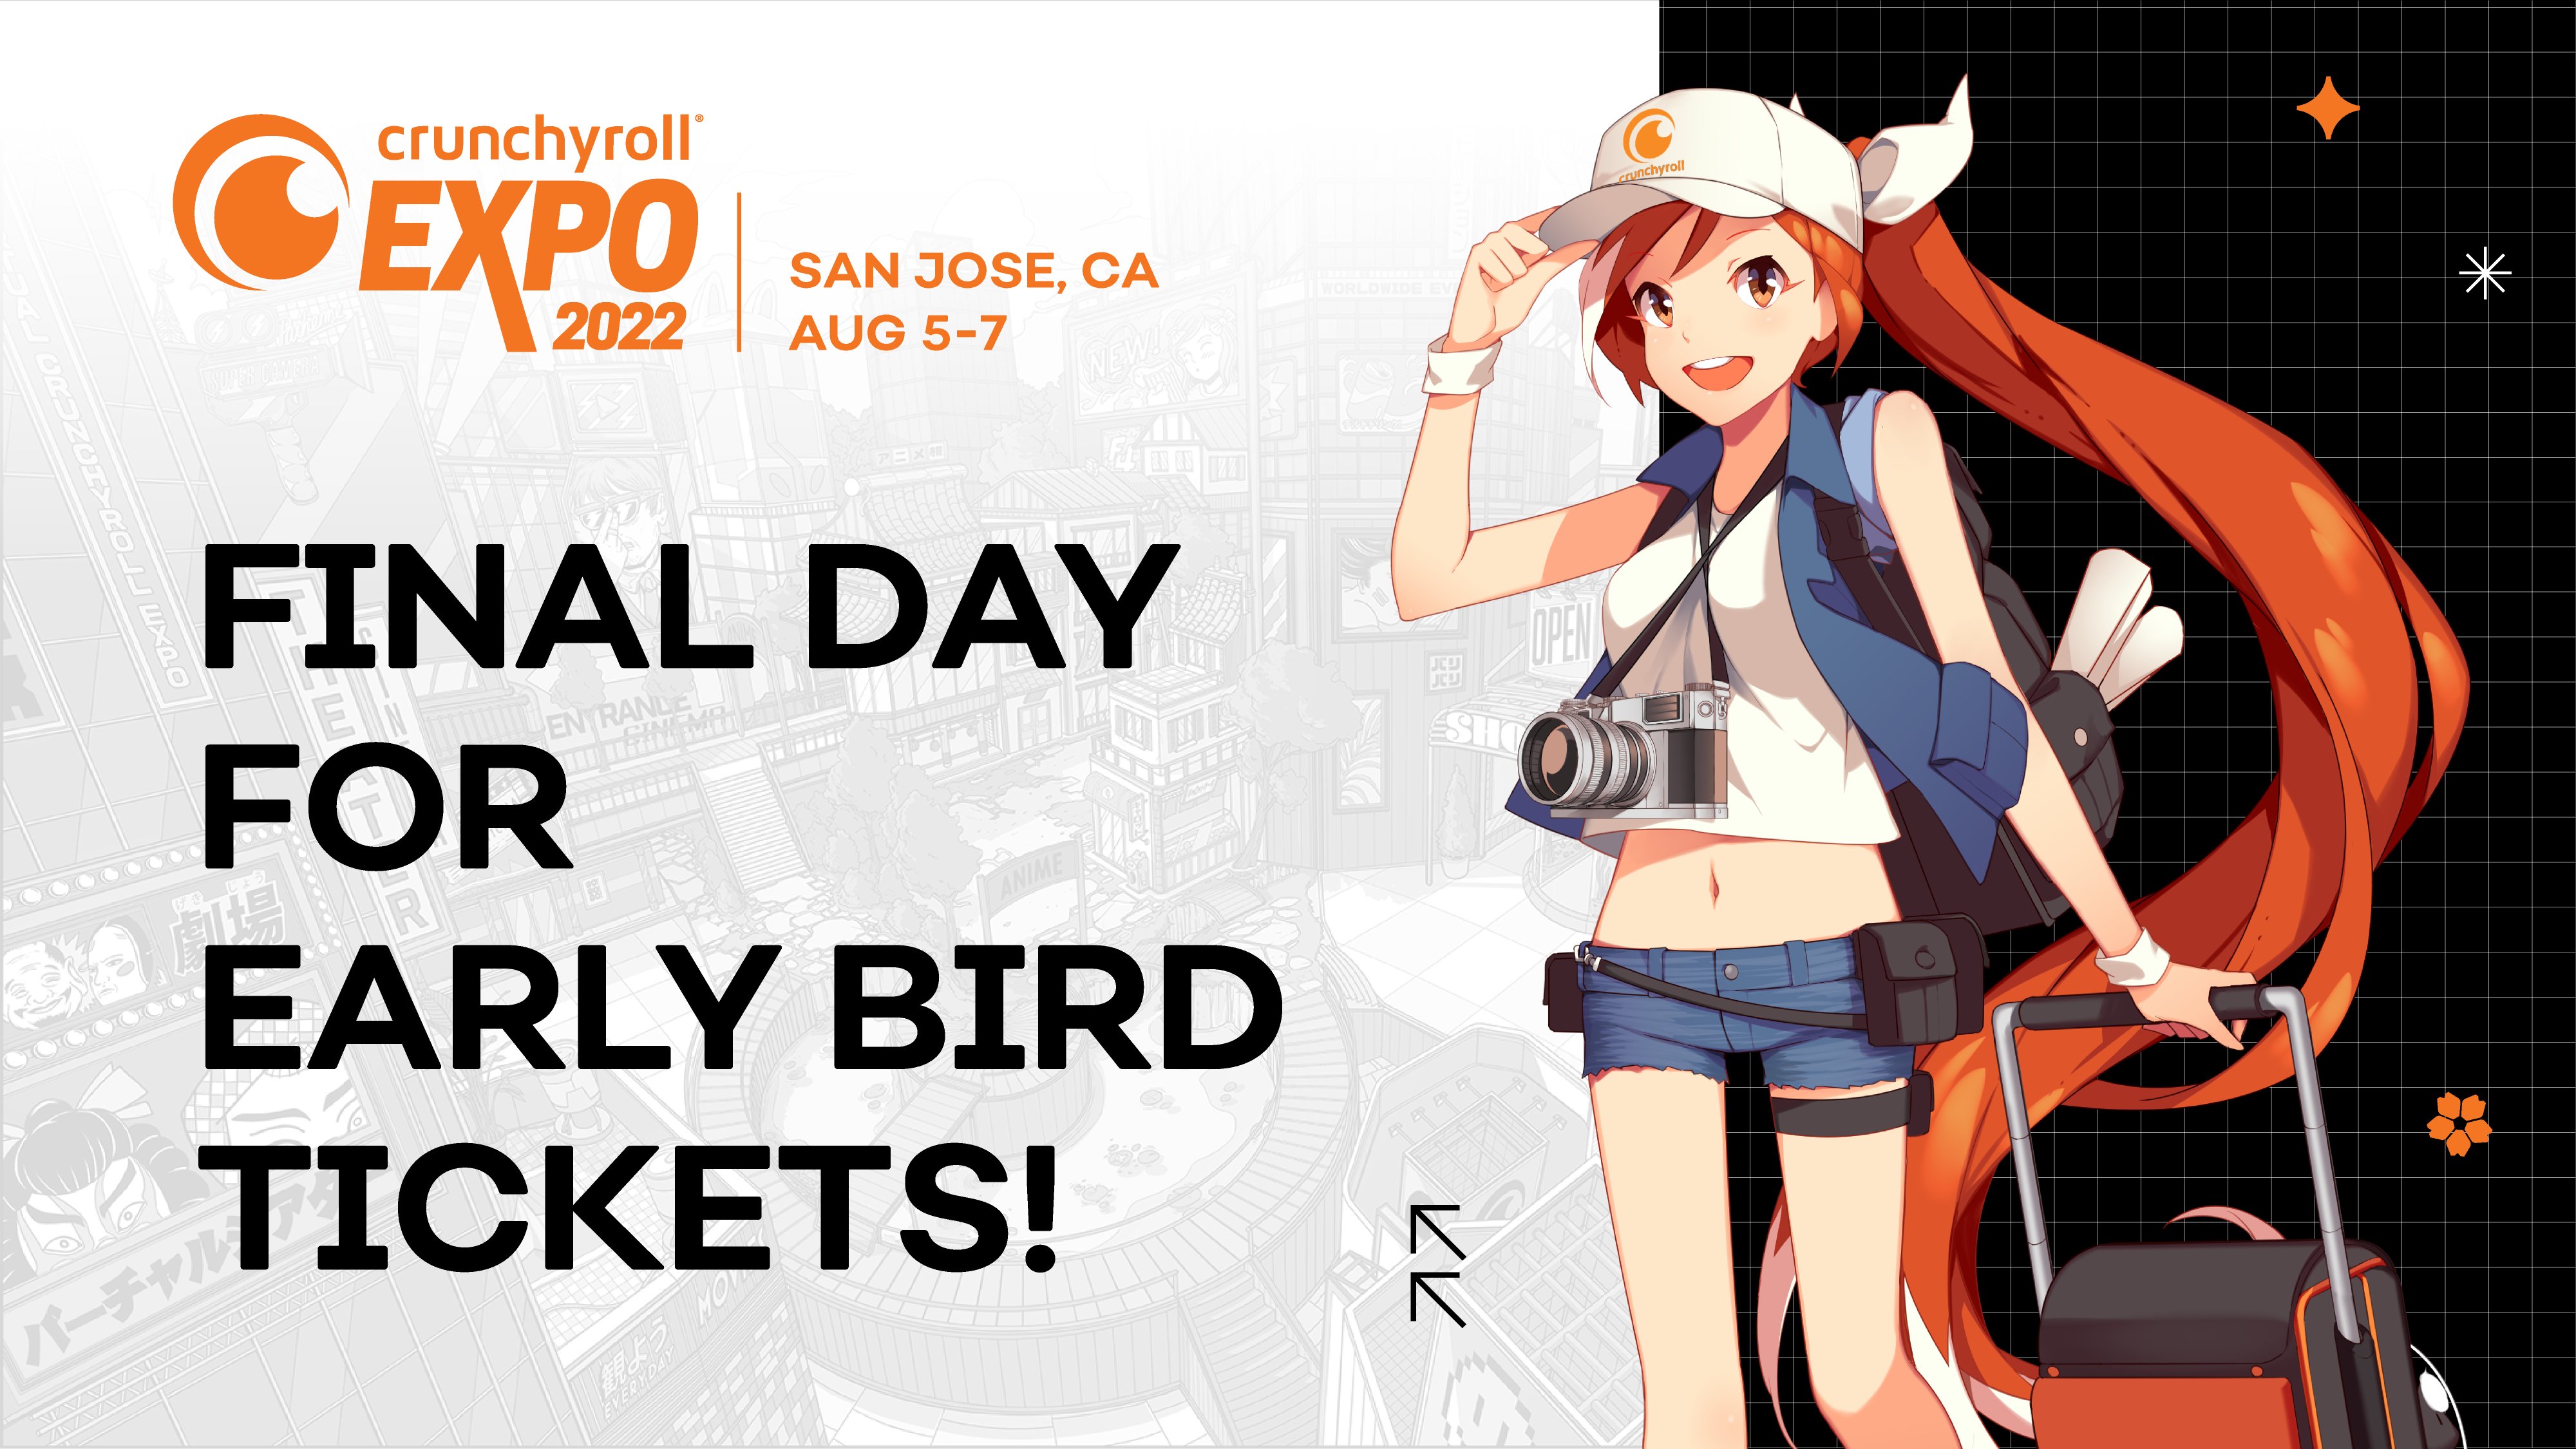 Crunchyroll Expo 2022 Kicks Off This August, Early Bird